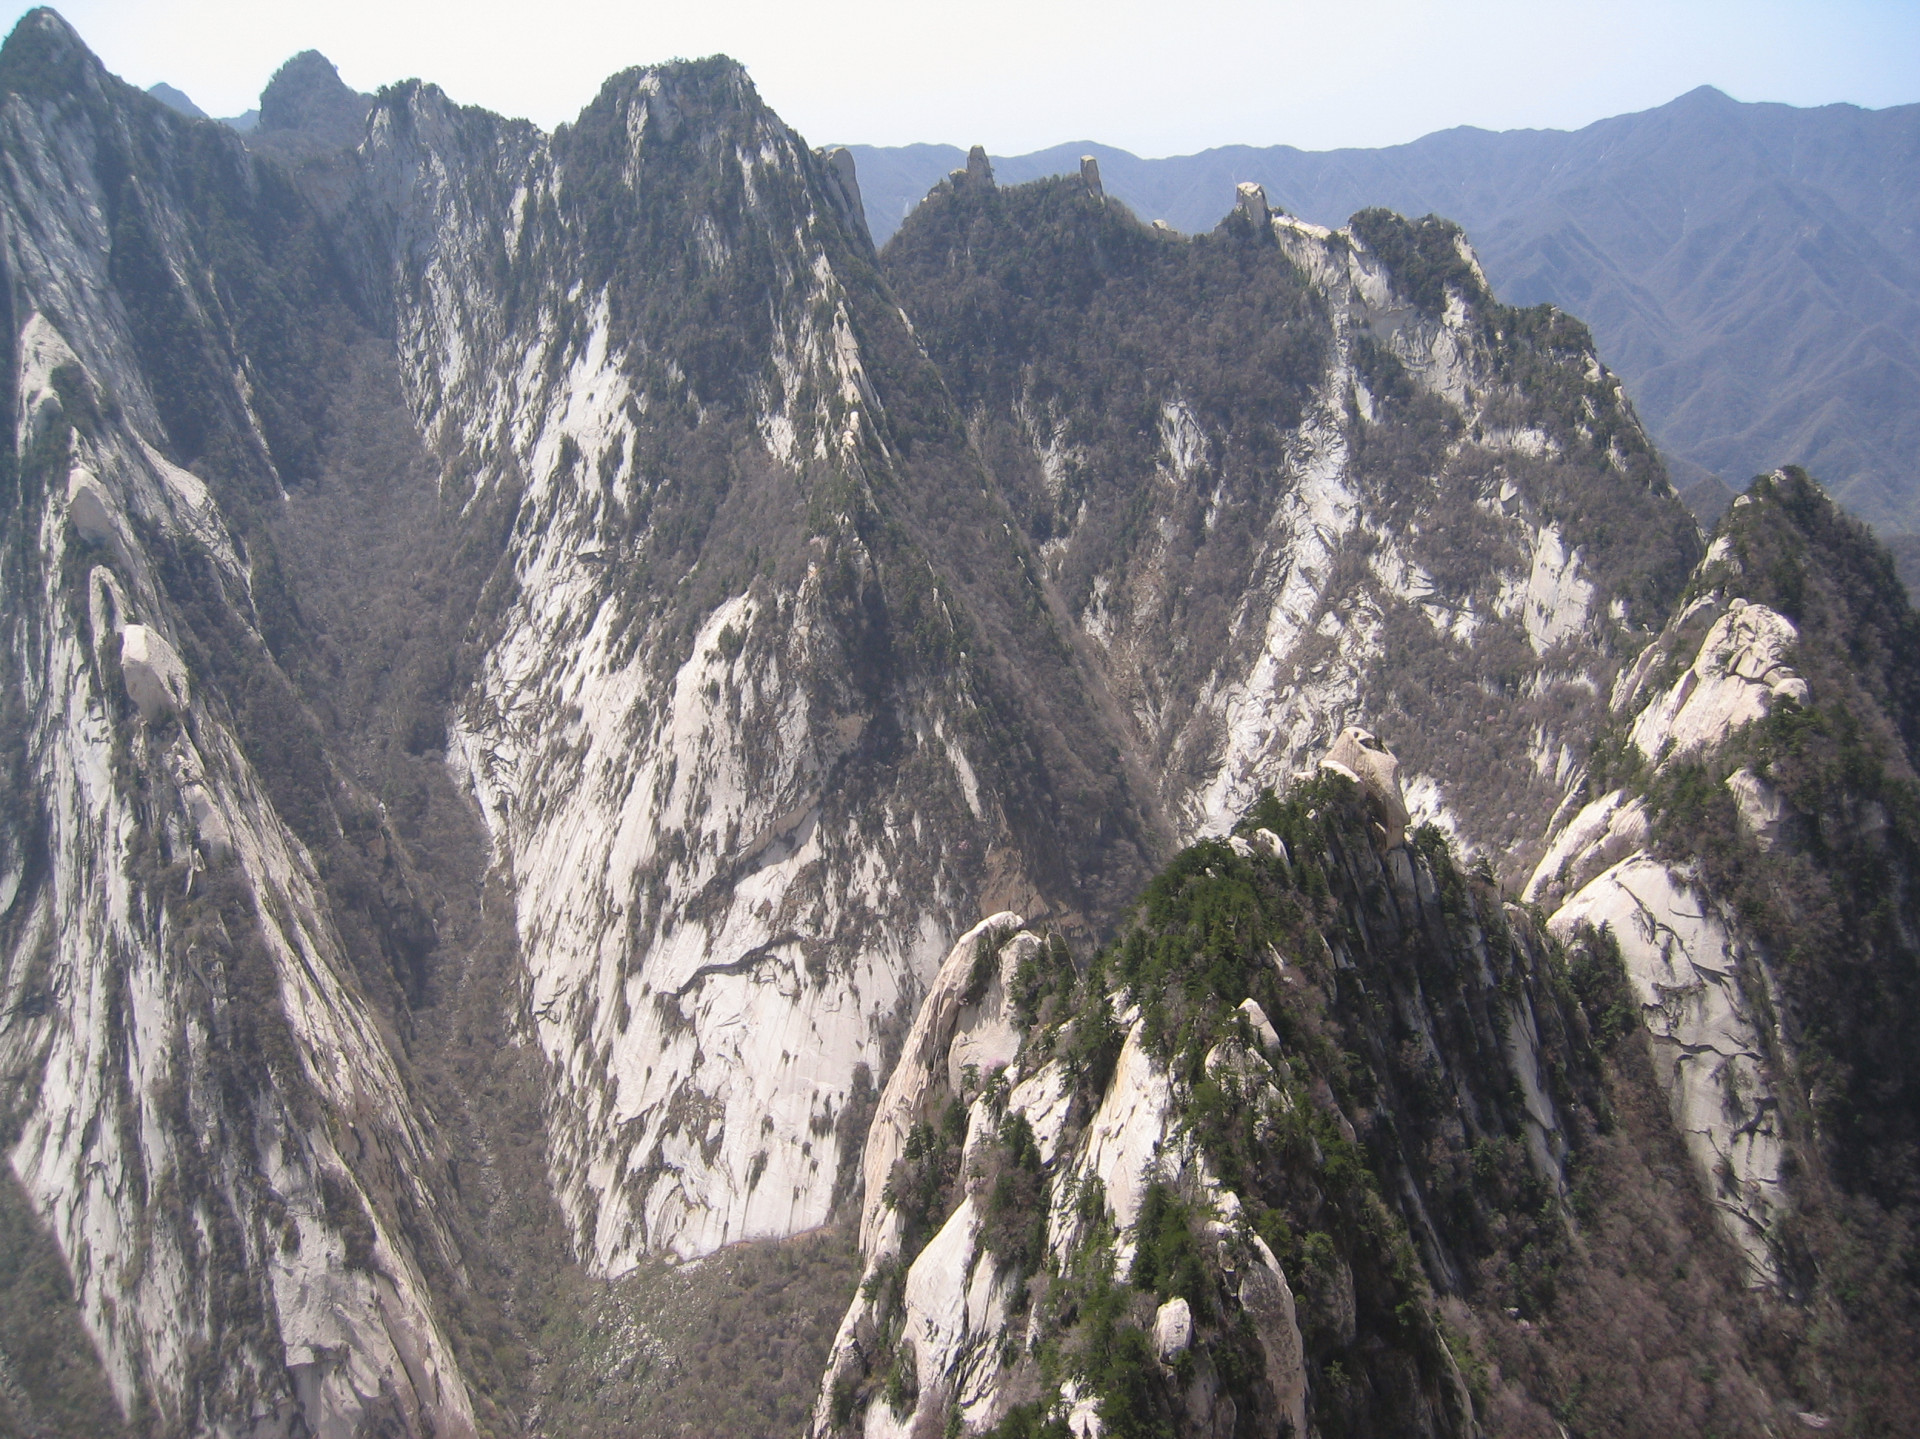 Mount Hua, one of China's five sacred mountains, is a hub of Taoism.